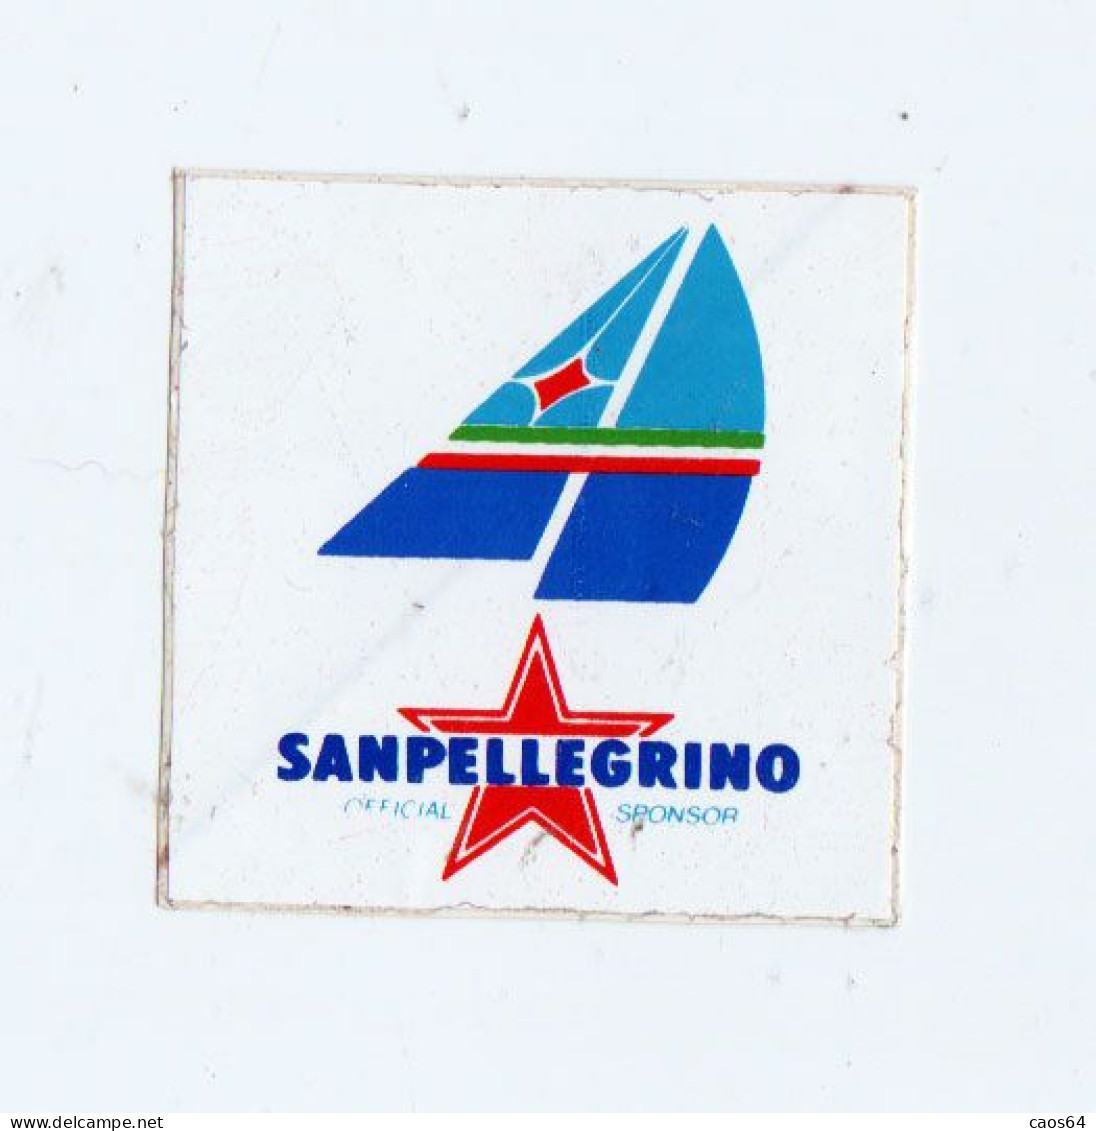 San Pellegrino Sponsor Vela  Cm 6 X 6  ADESIVO STICKER  NEW ORIGINAL - Stickers